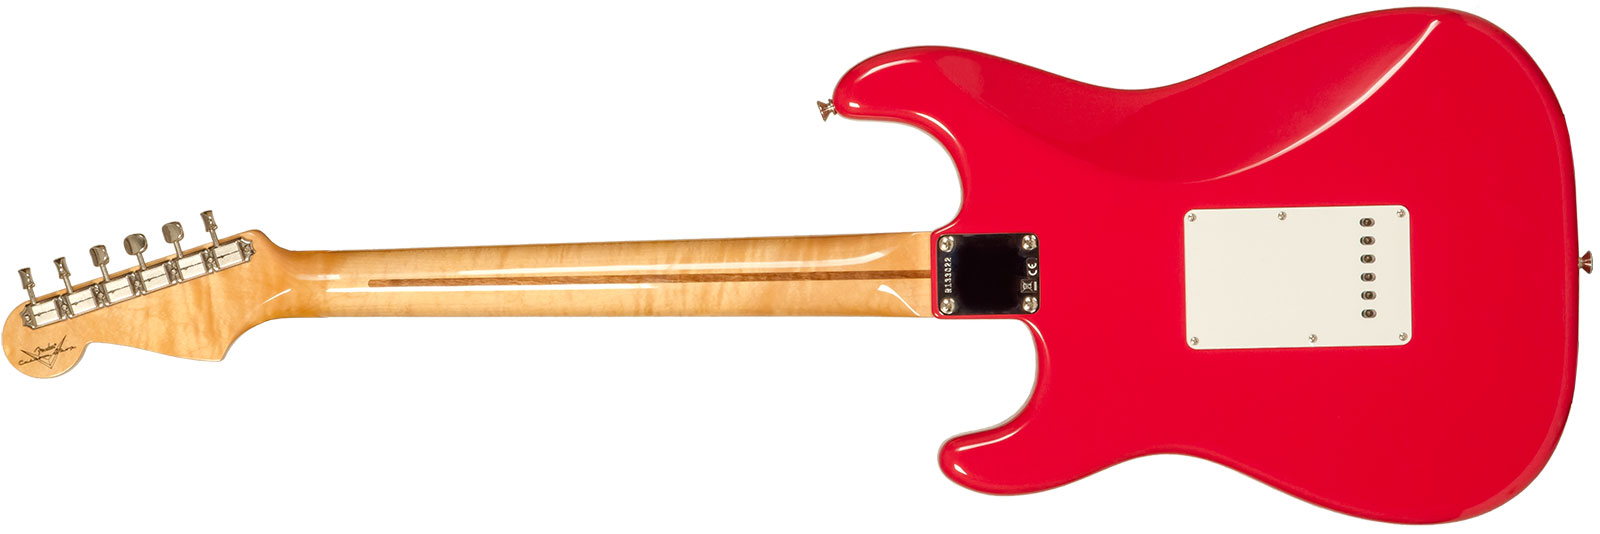 Fender Custom Shop Strat 1956 3s Trem Mn #r133022 - Nos Fiesta Red - E-Gitarre in Str-Form - Variation 1